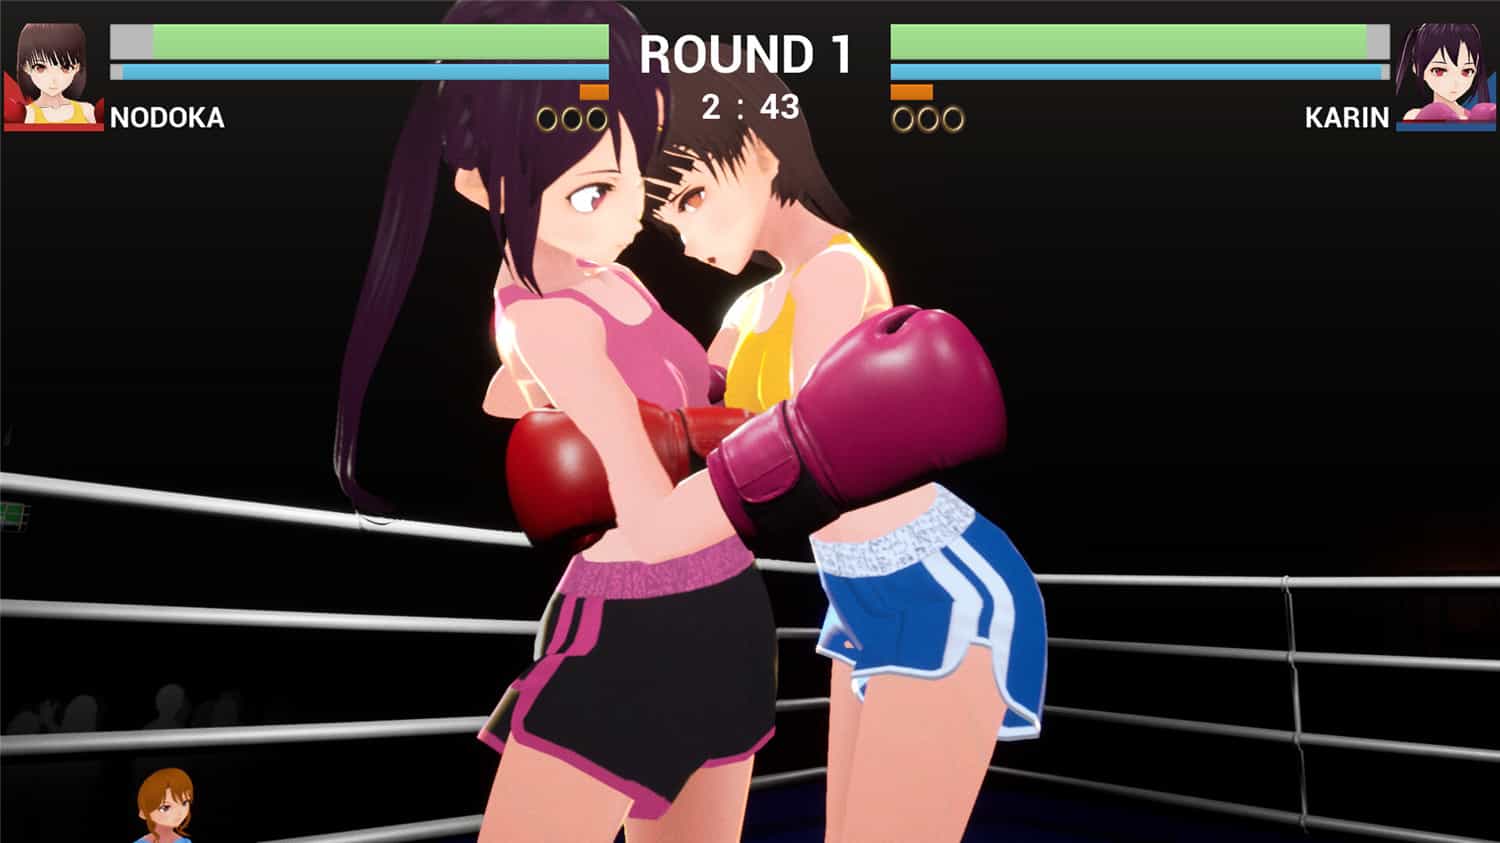 罪爱拳击/Guilty Loving Boxing v1.0.0 官方简体中文 1.17GB插图5